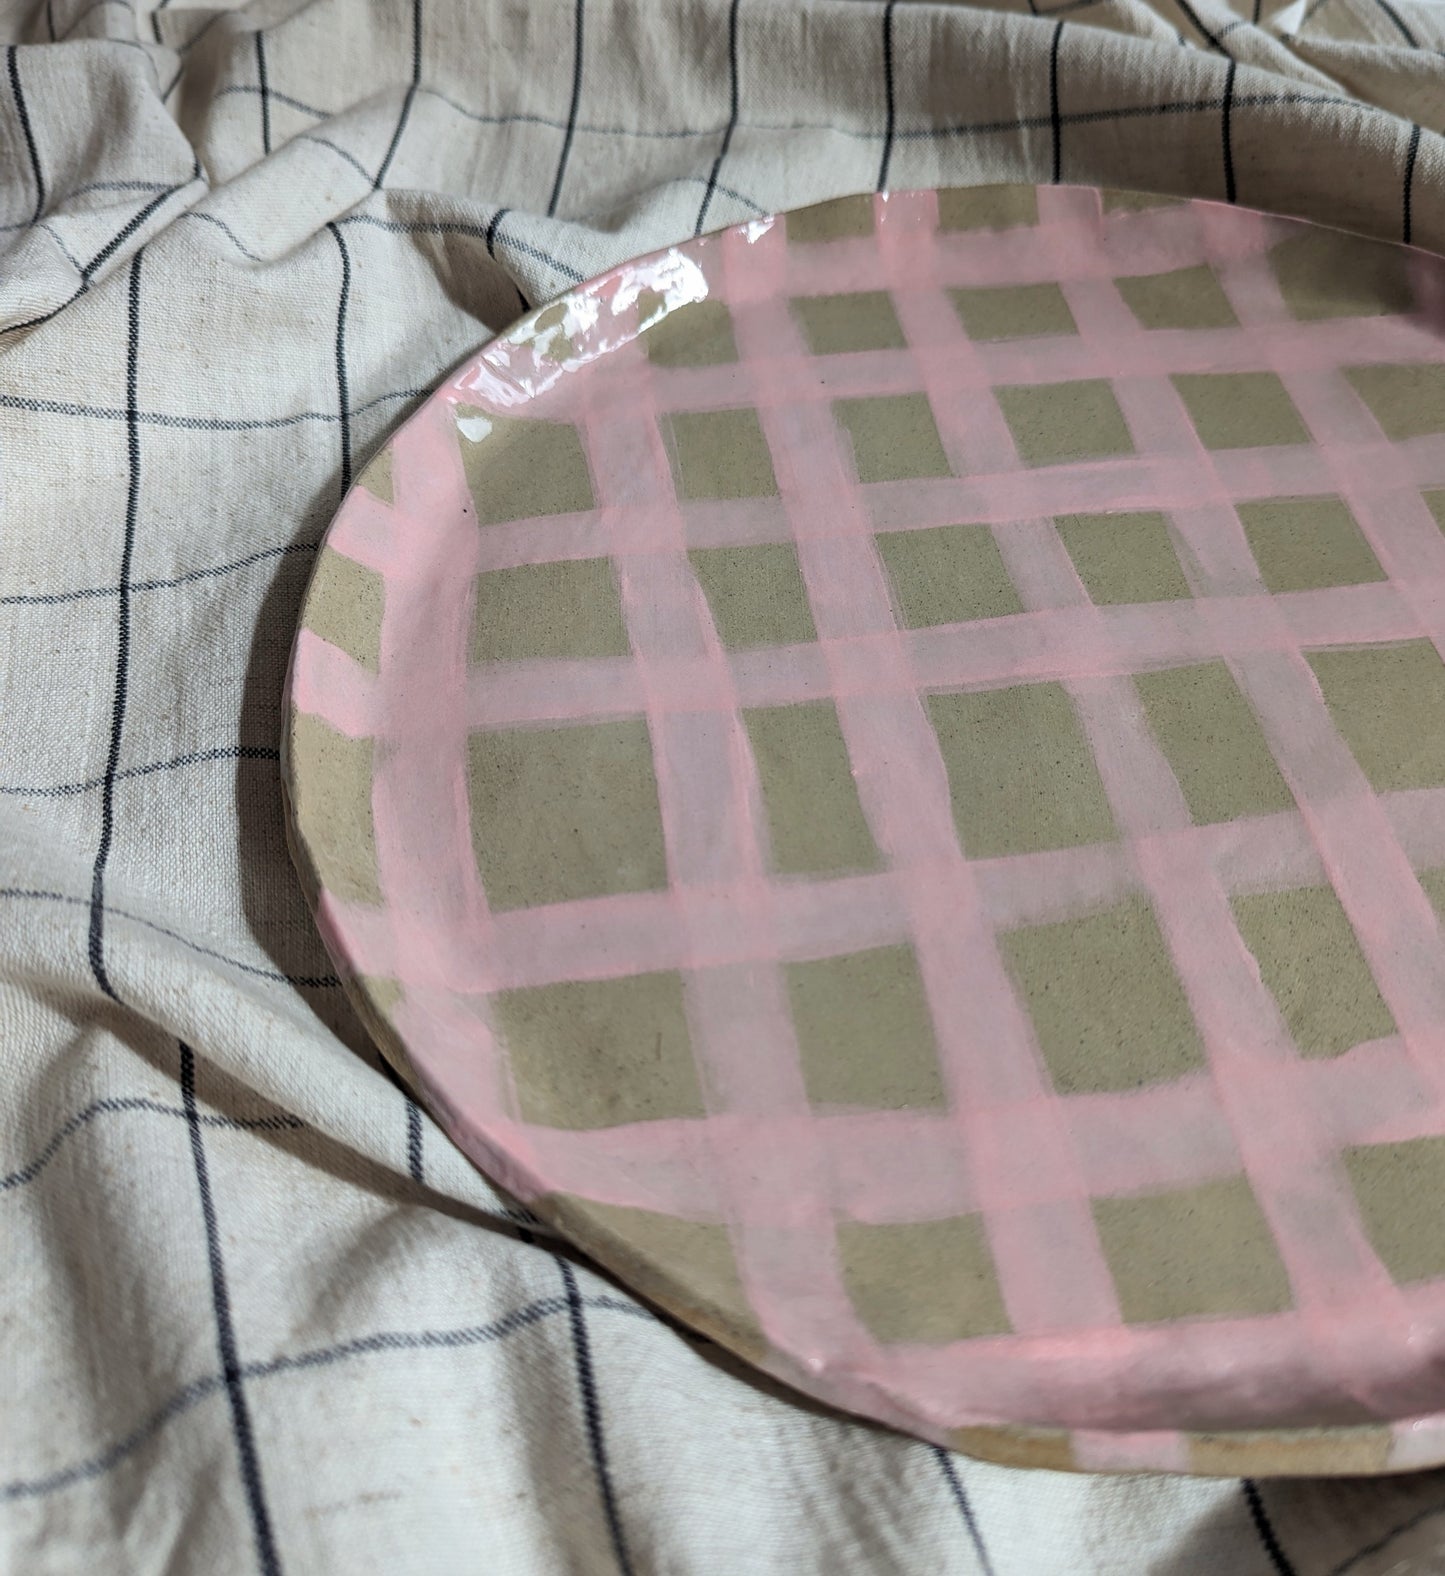 Pink Gingham Platter